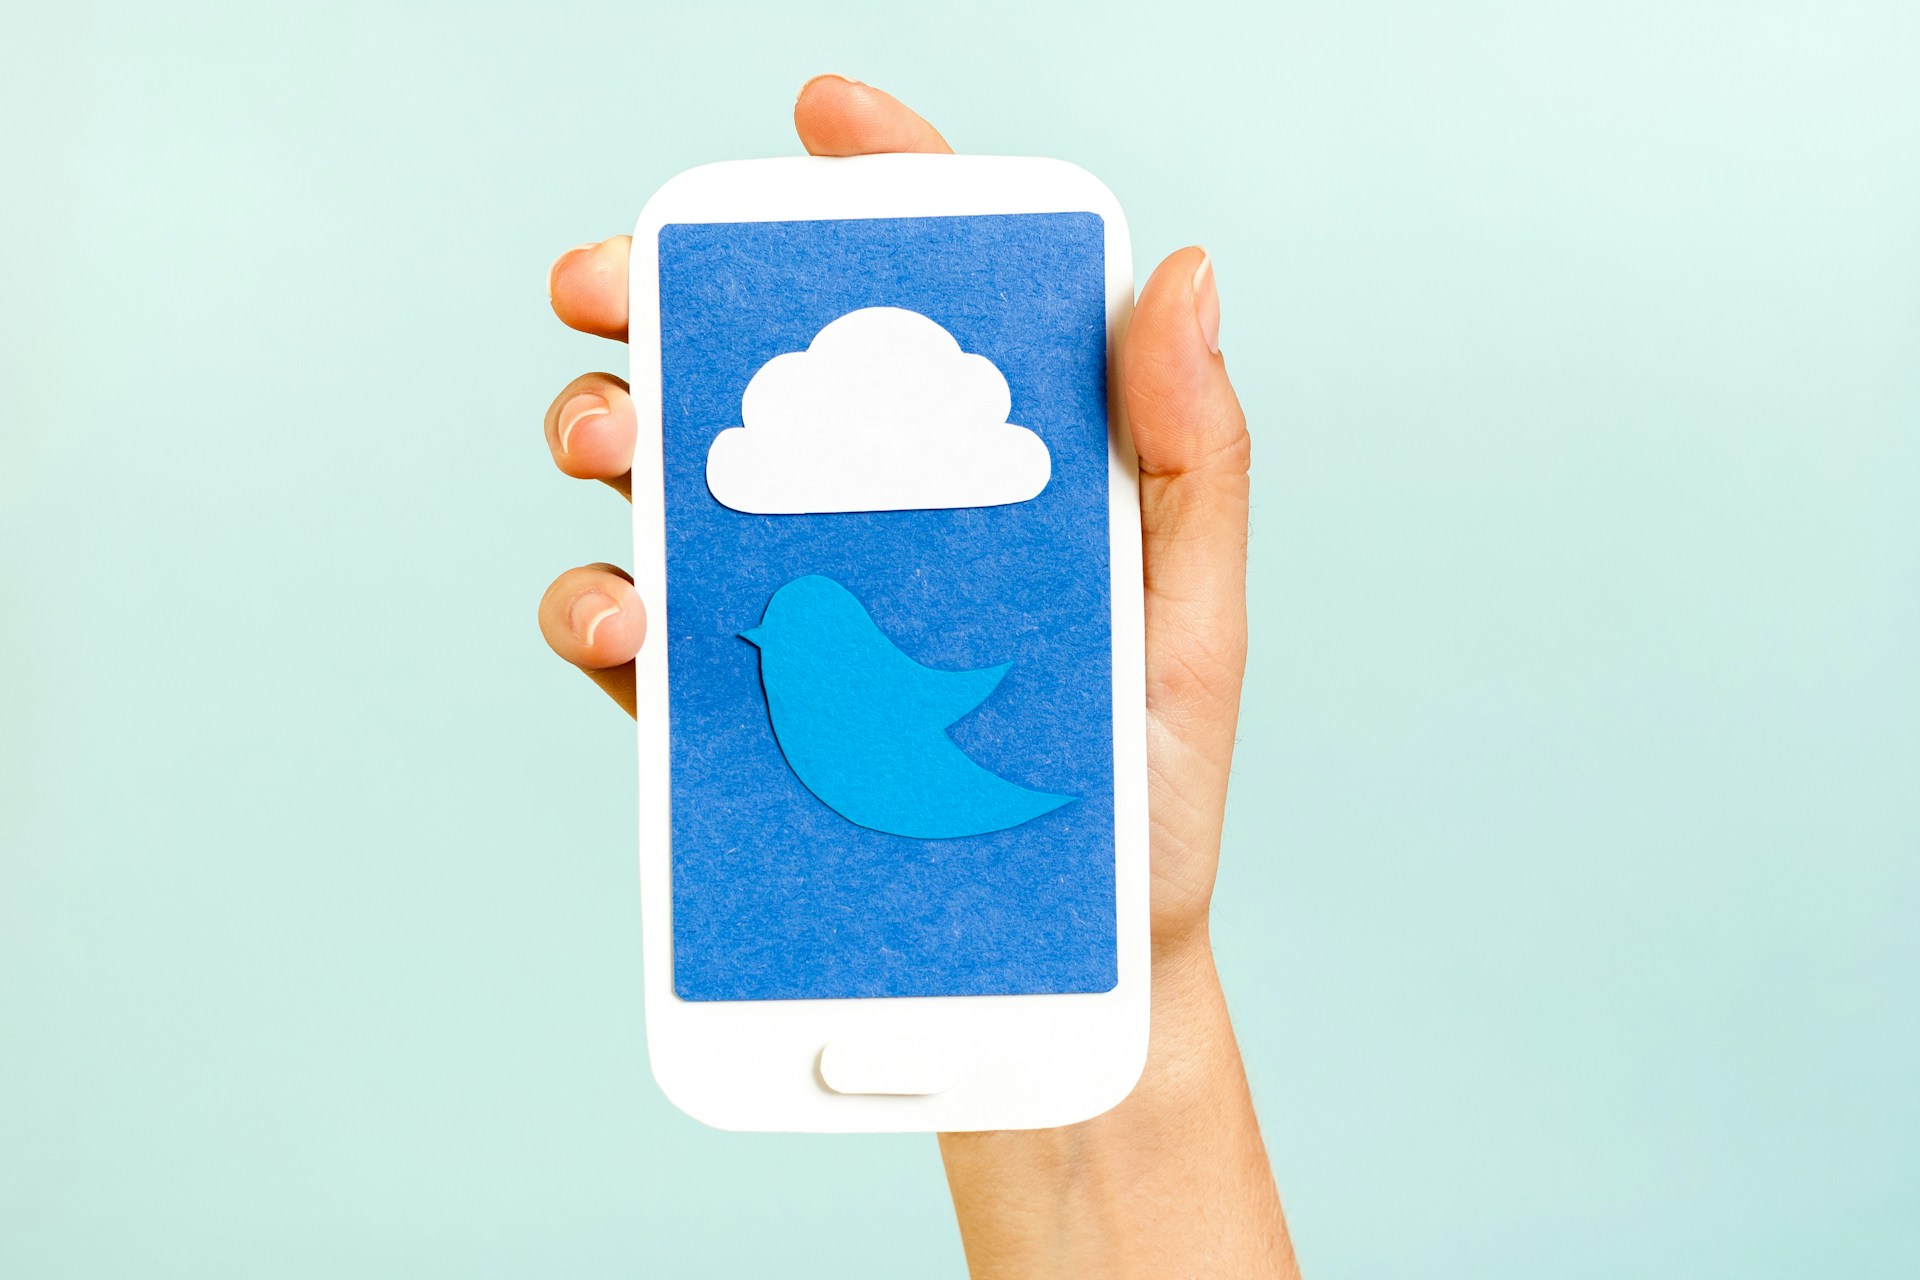 Twitterのアイコンと雲が表示されているスマートフォンを持つ手の画像